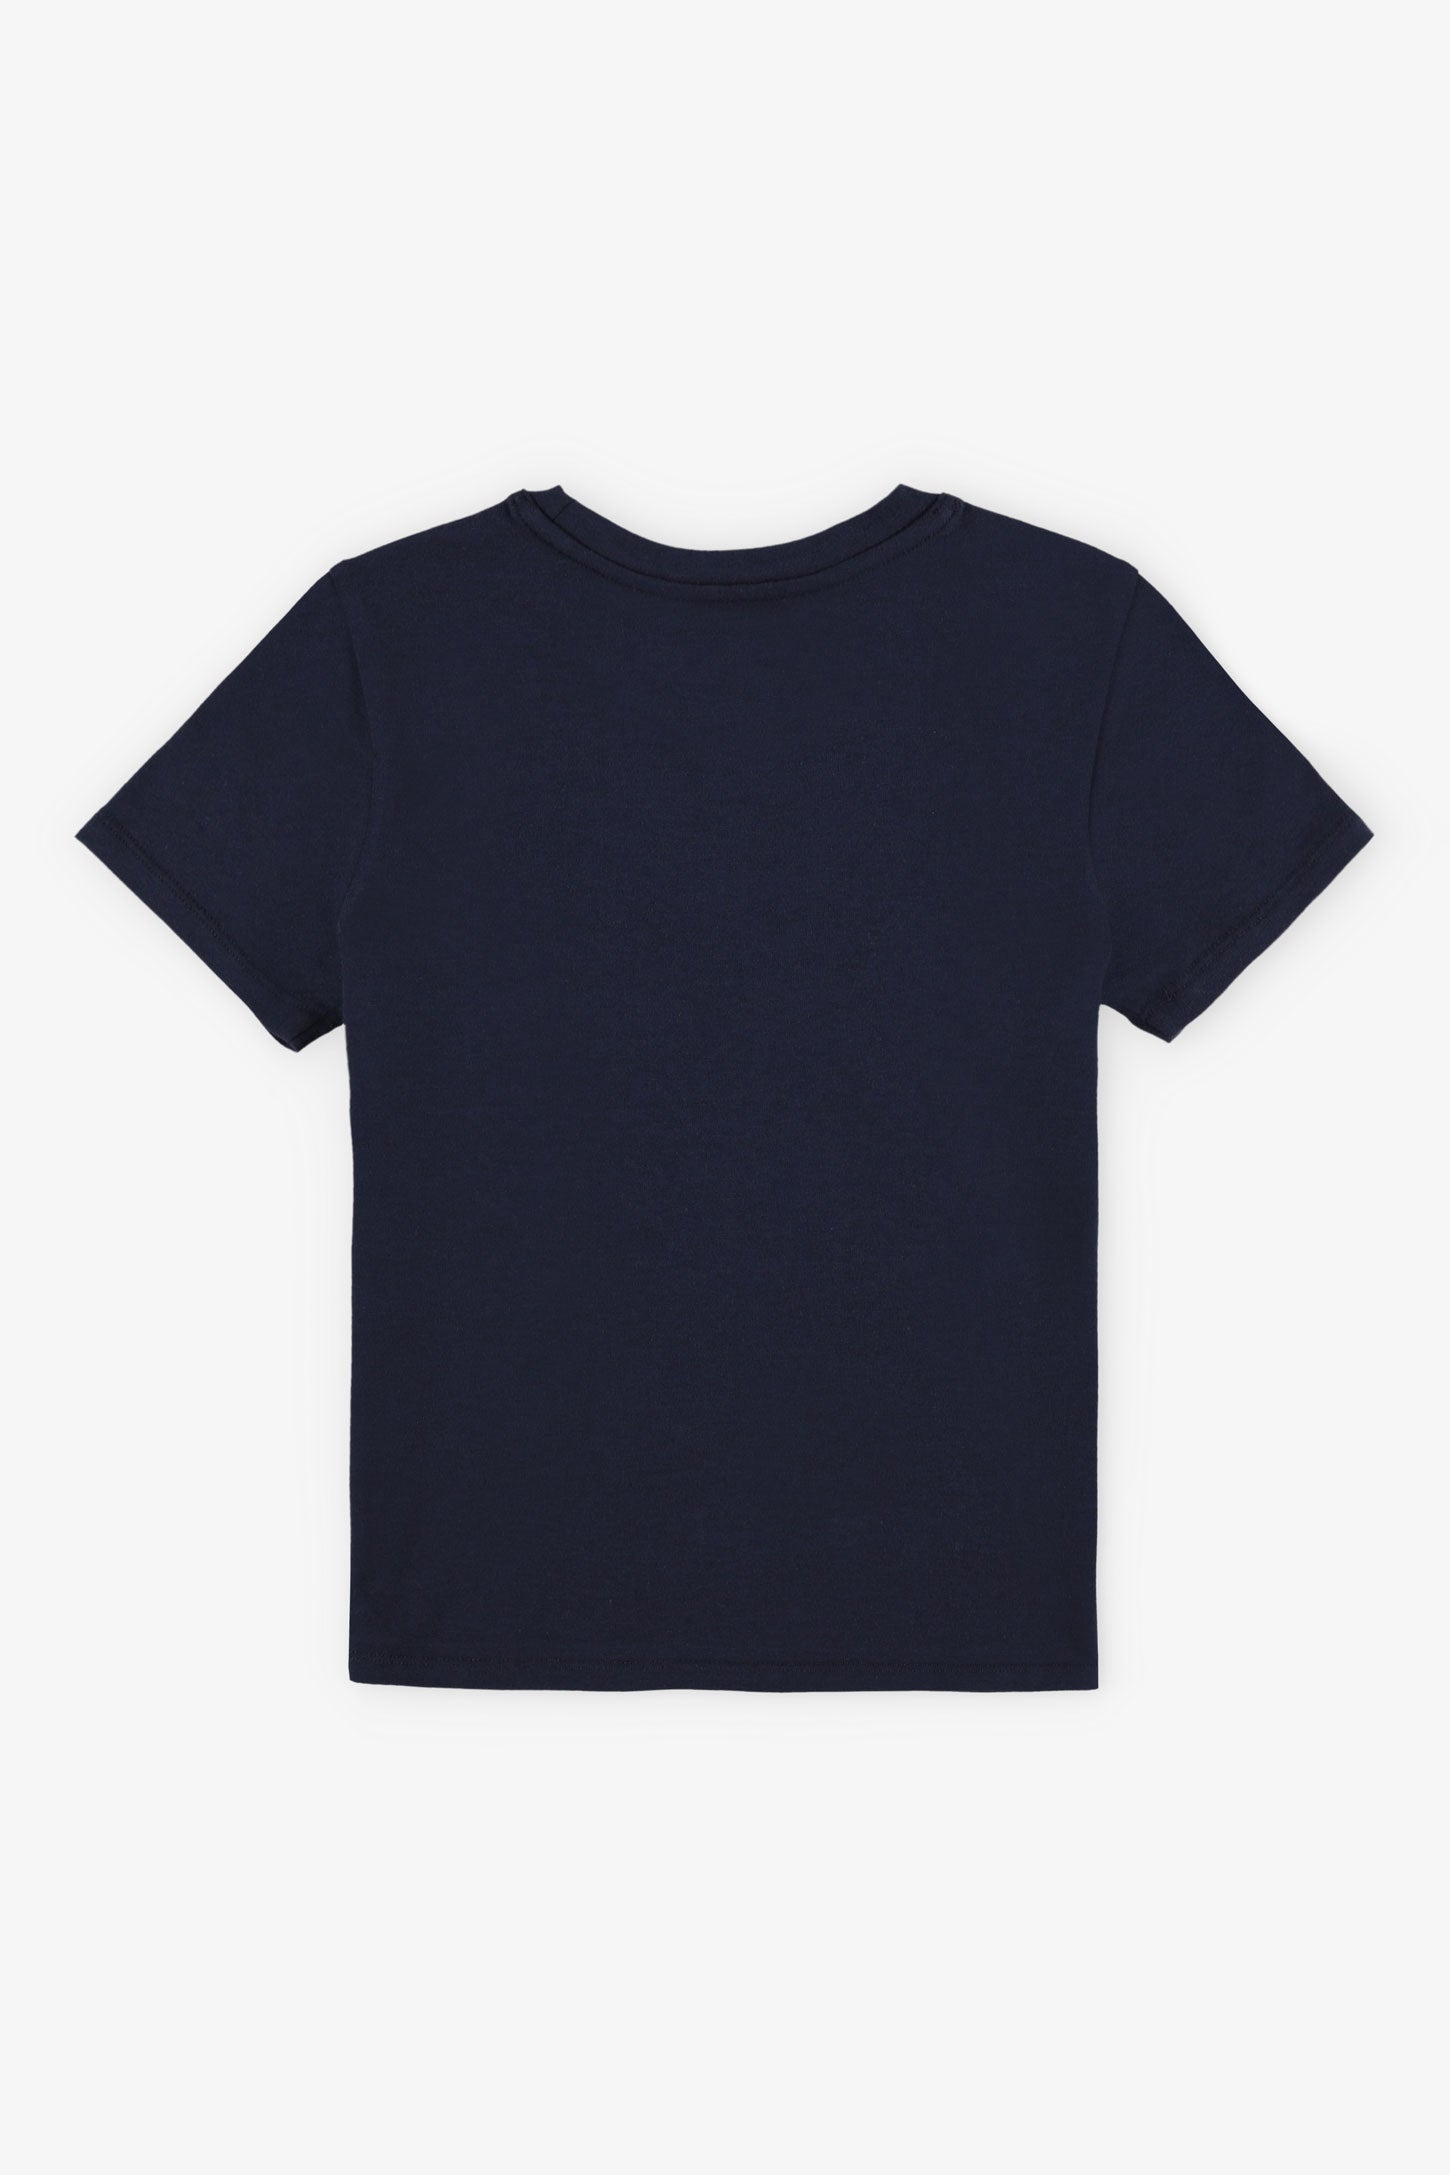 T-shirt col rond à poche, 2/20$ - Enfant garçon && BLEU MARINE